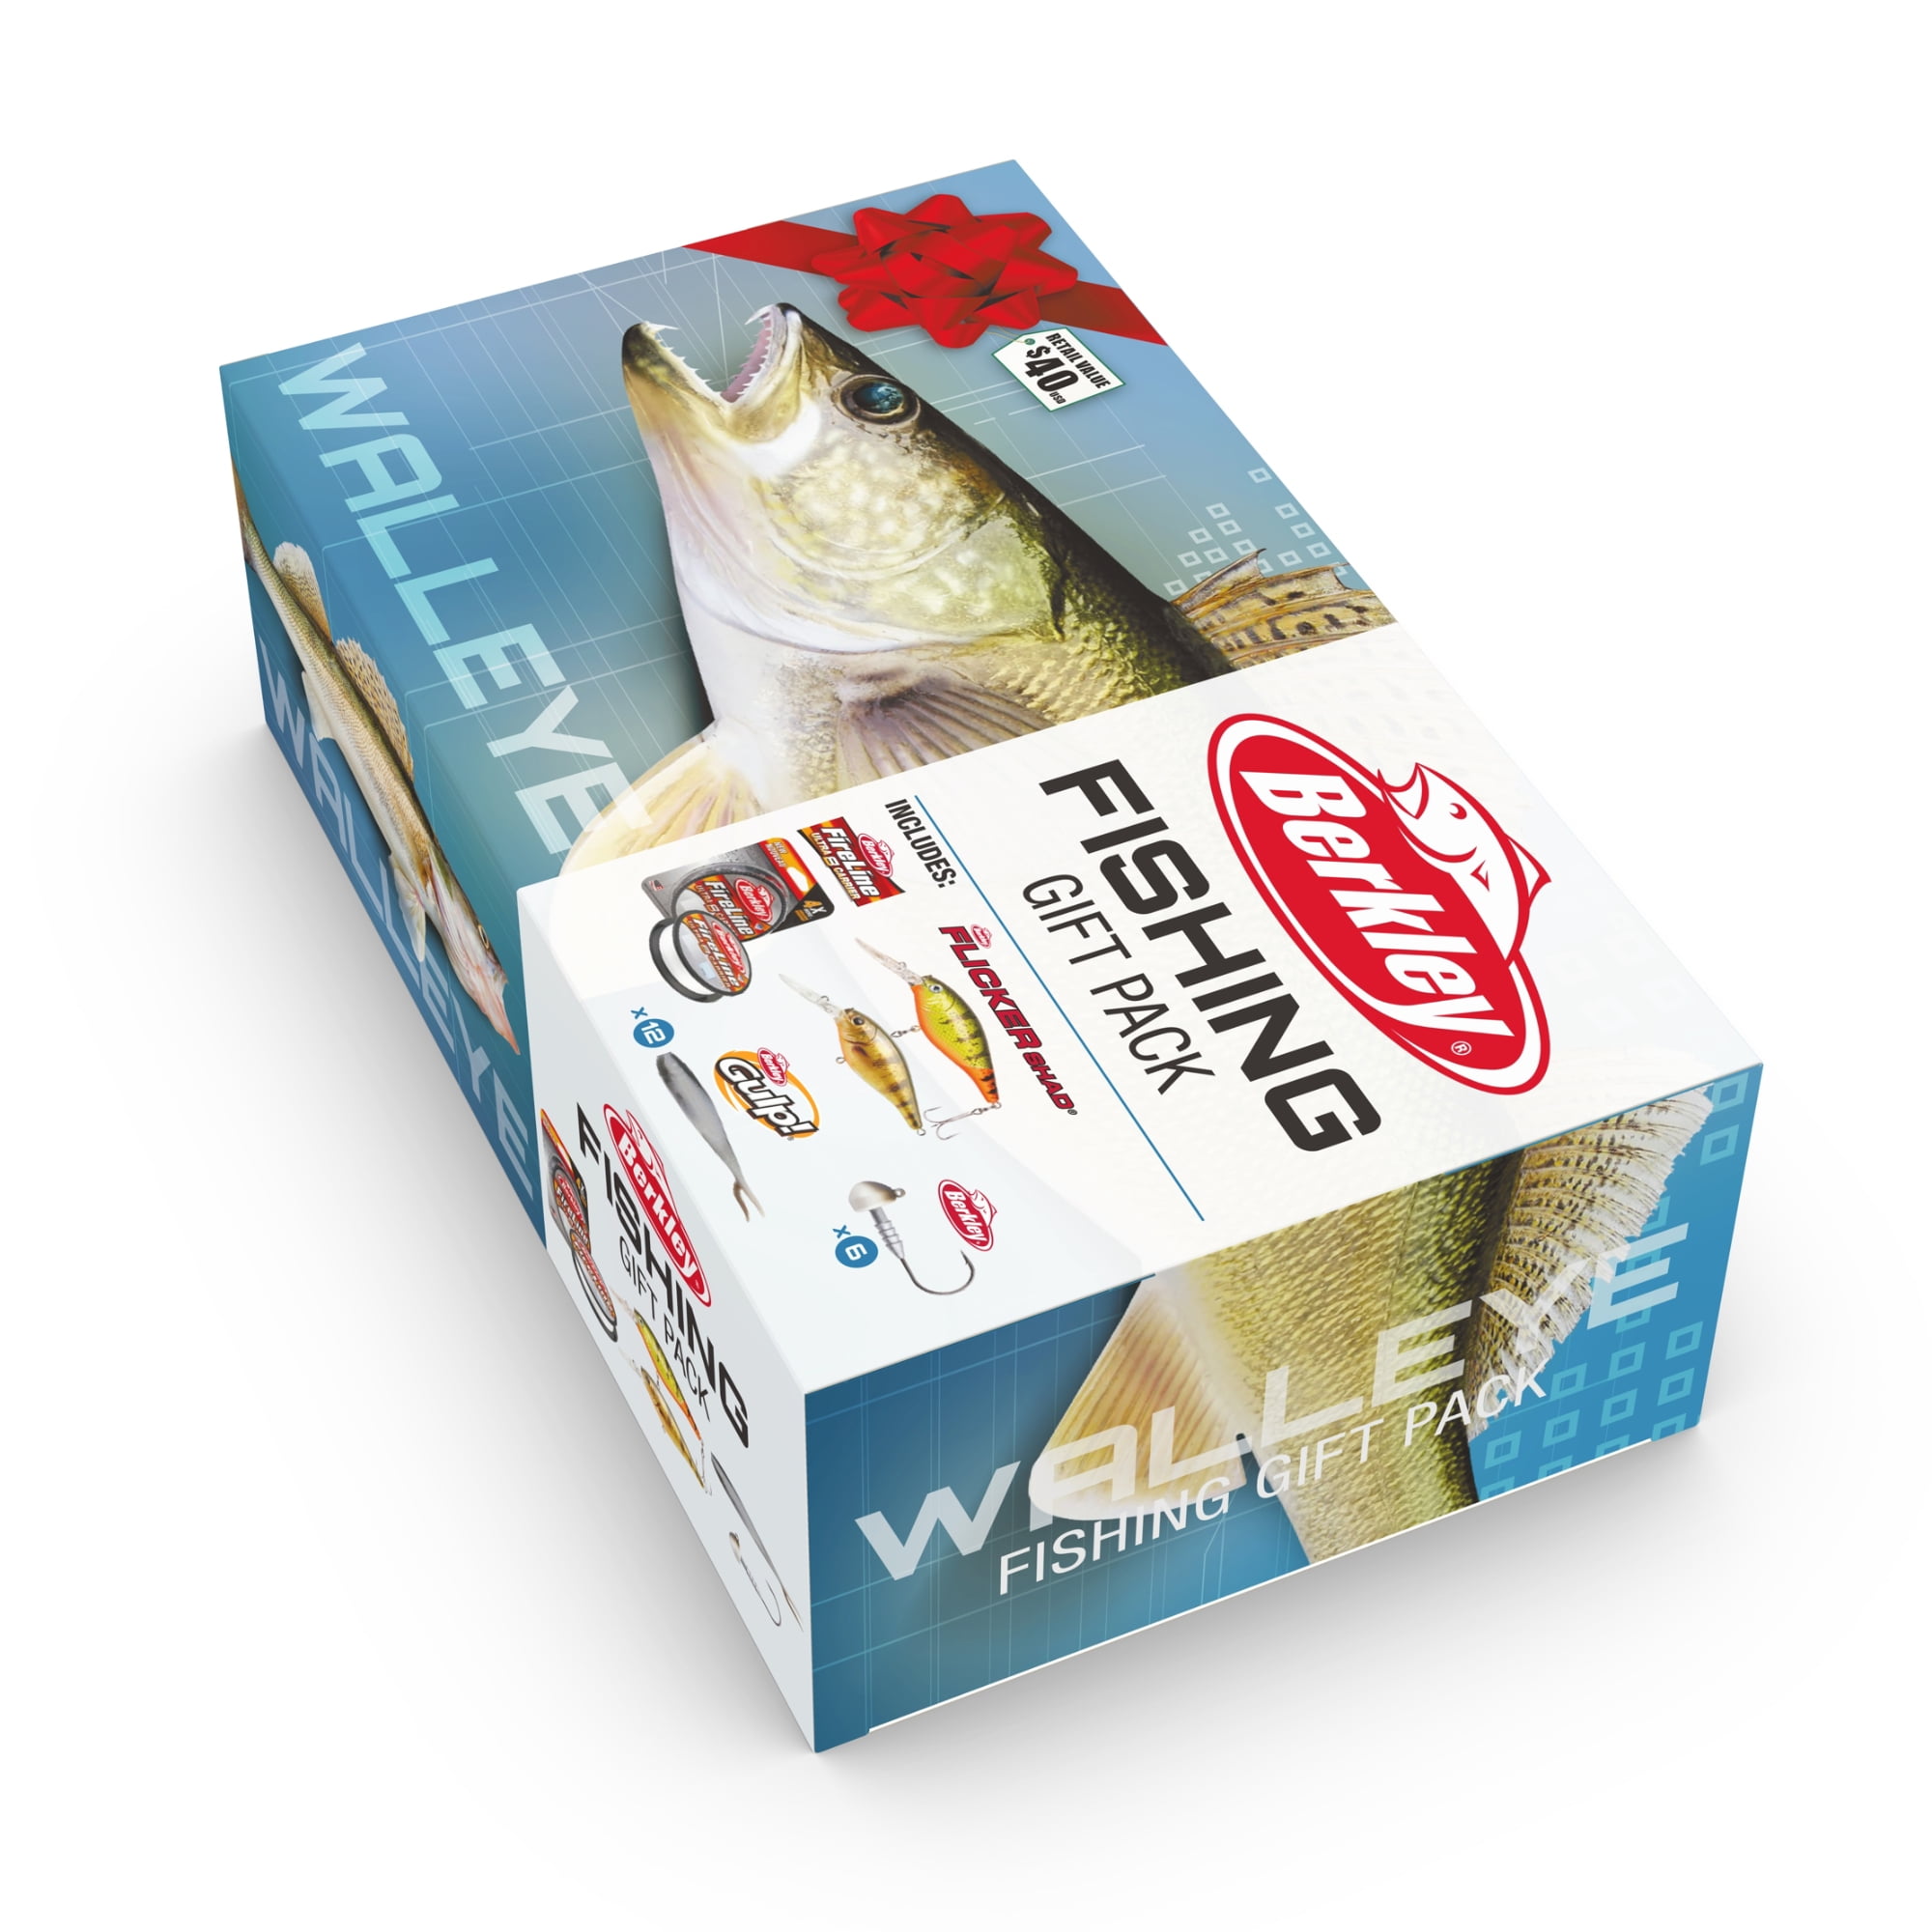 Berkley® Walleye Fishing Gift Pack, Multi Lures, Ultra 8 Carrier Line